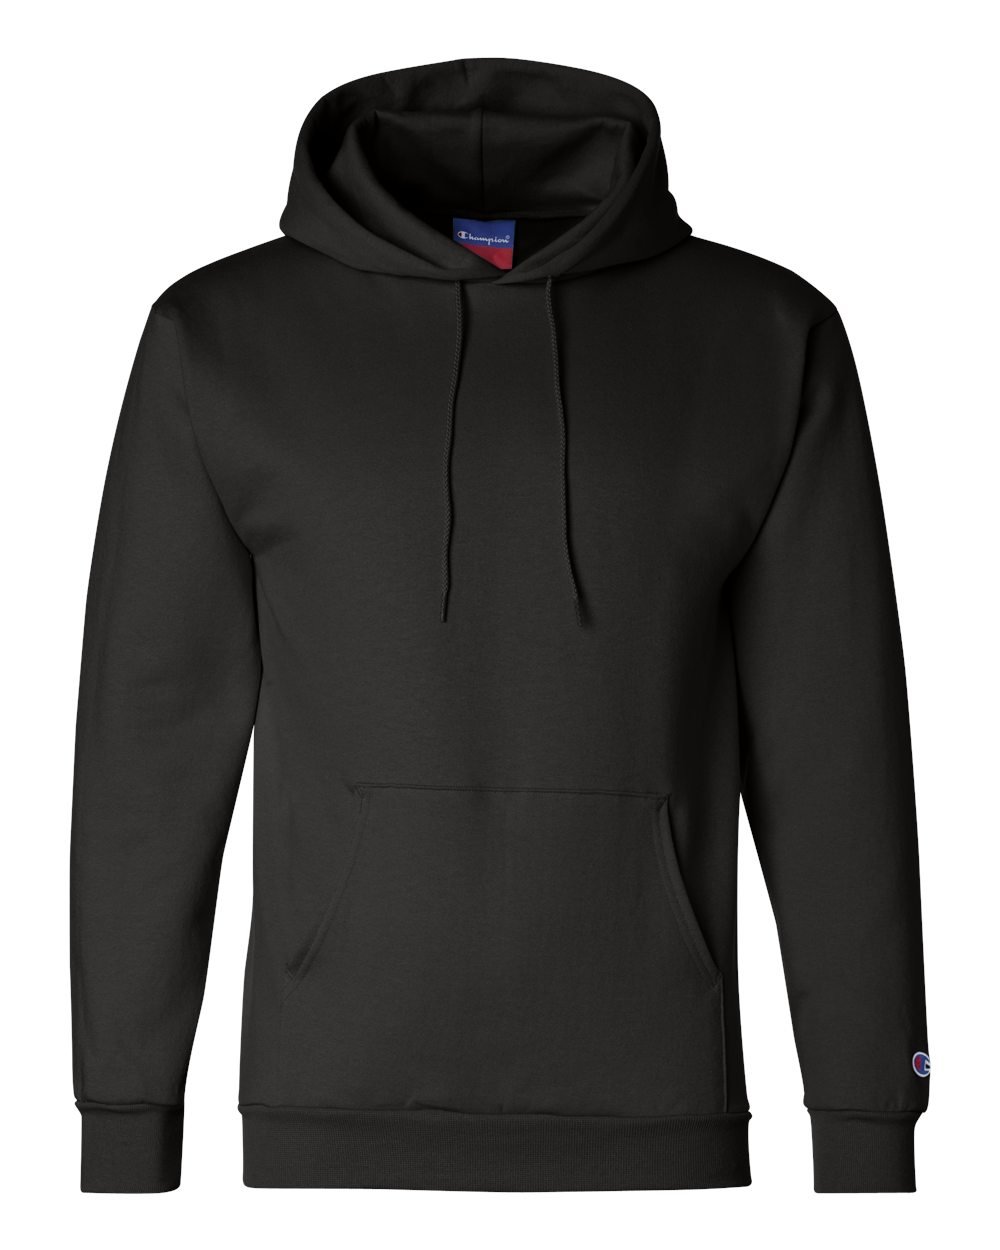 Champion Hooded Sweatshirt, Black, Medium